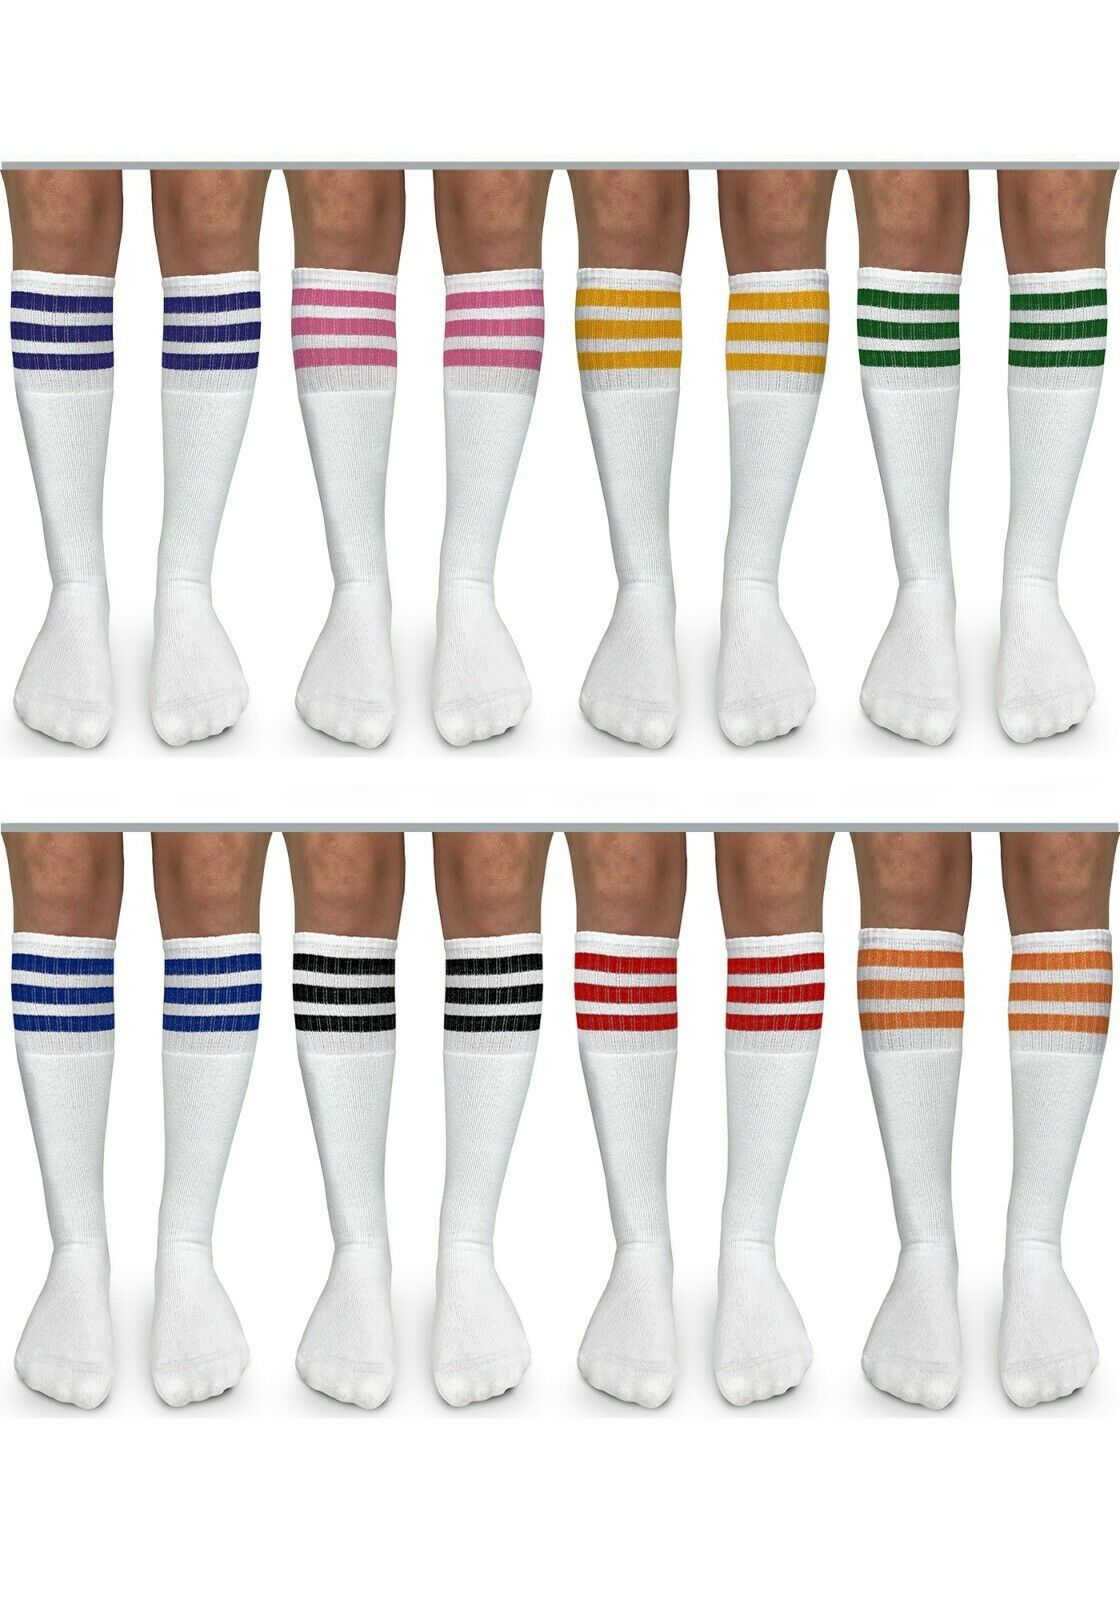 Jefferies Socks Boys Girls Stripe Vintage School Knee High Tall Tube Socks 3 PK